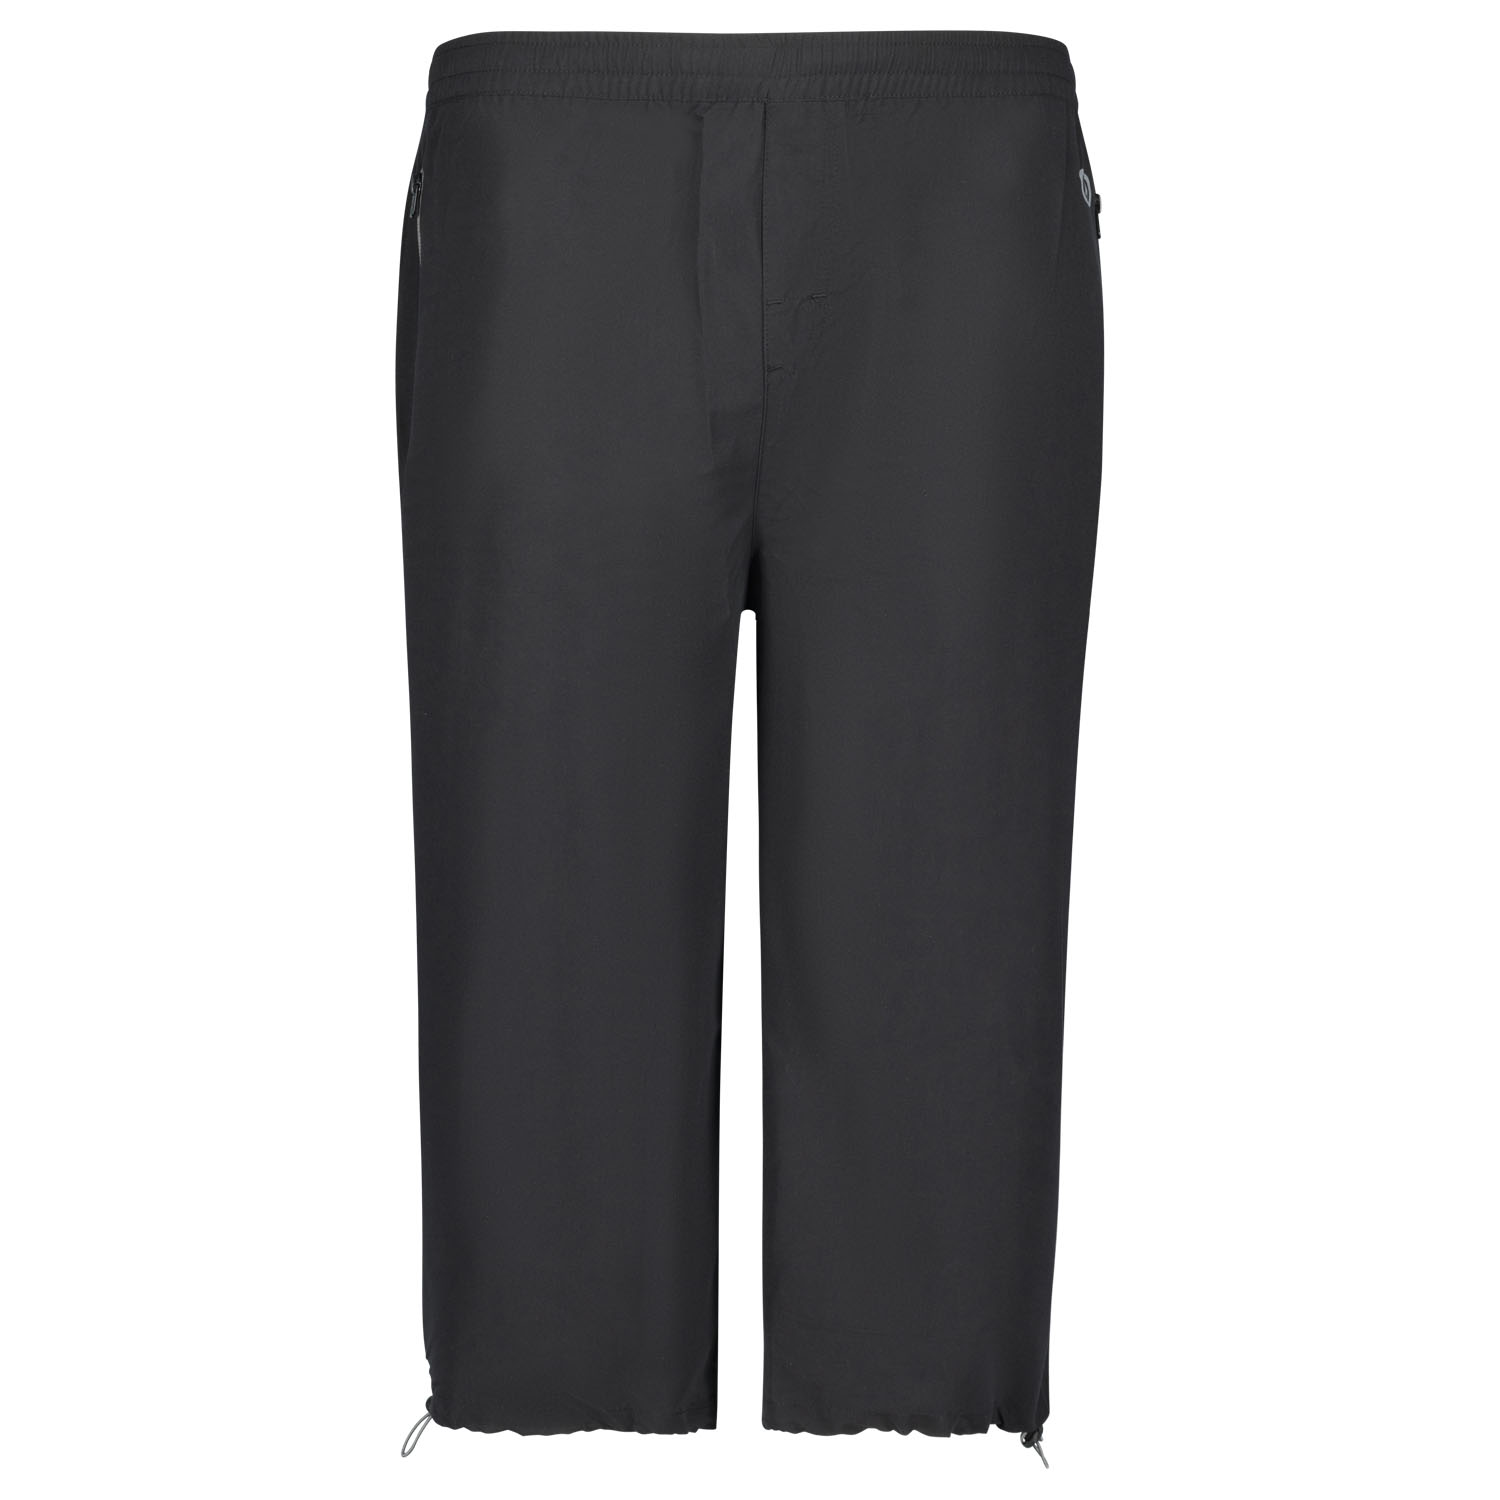 Men's capri pants series Oskar by Adamo in oversizes up to 14XL